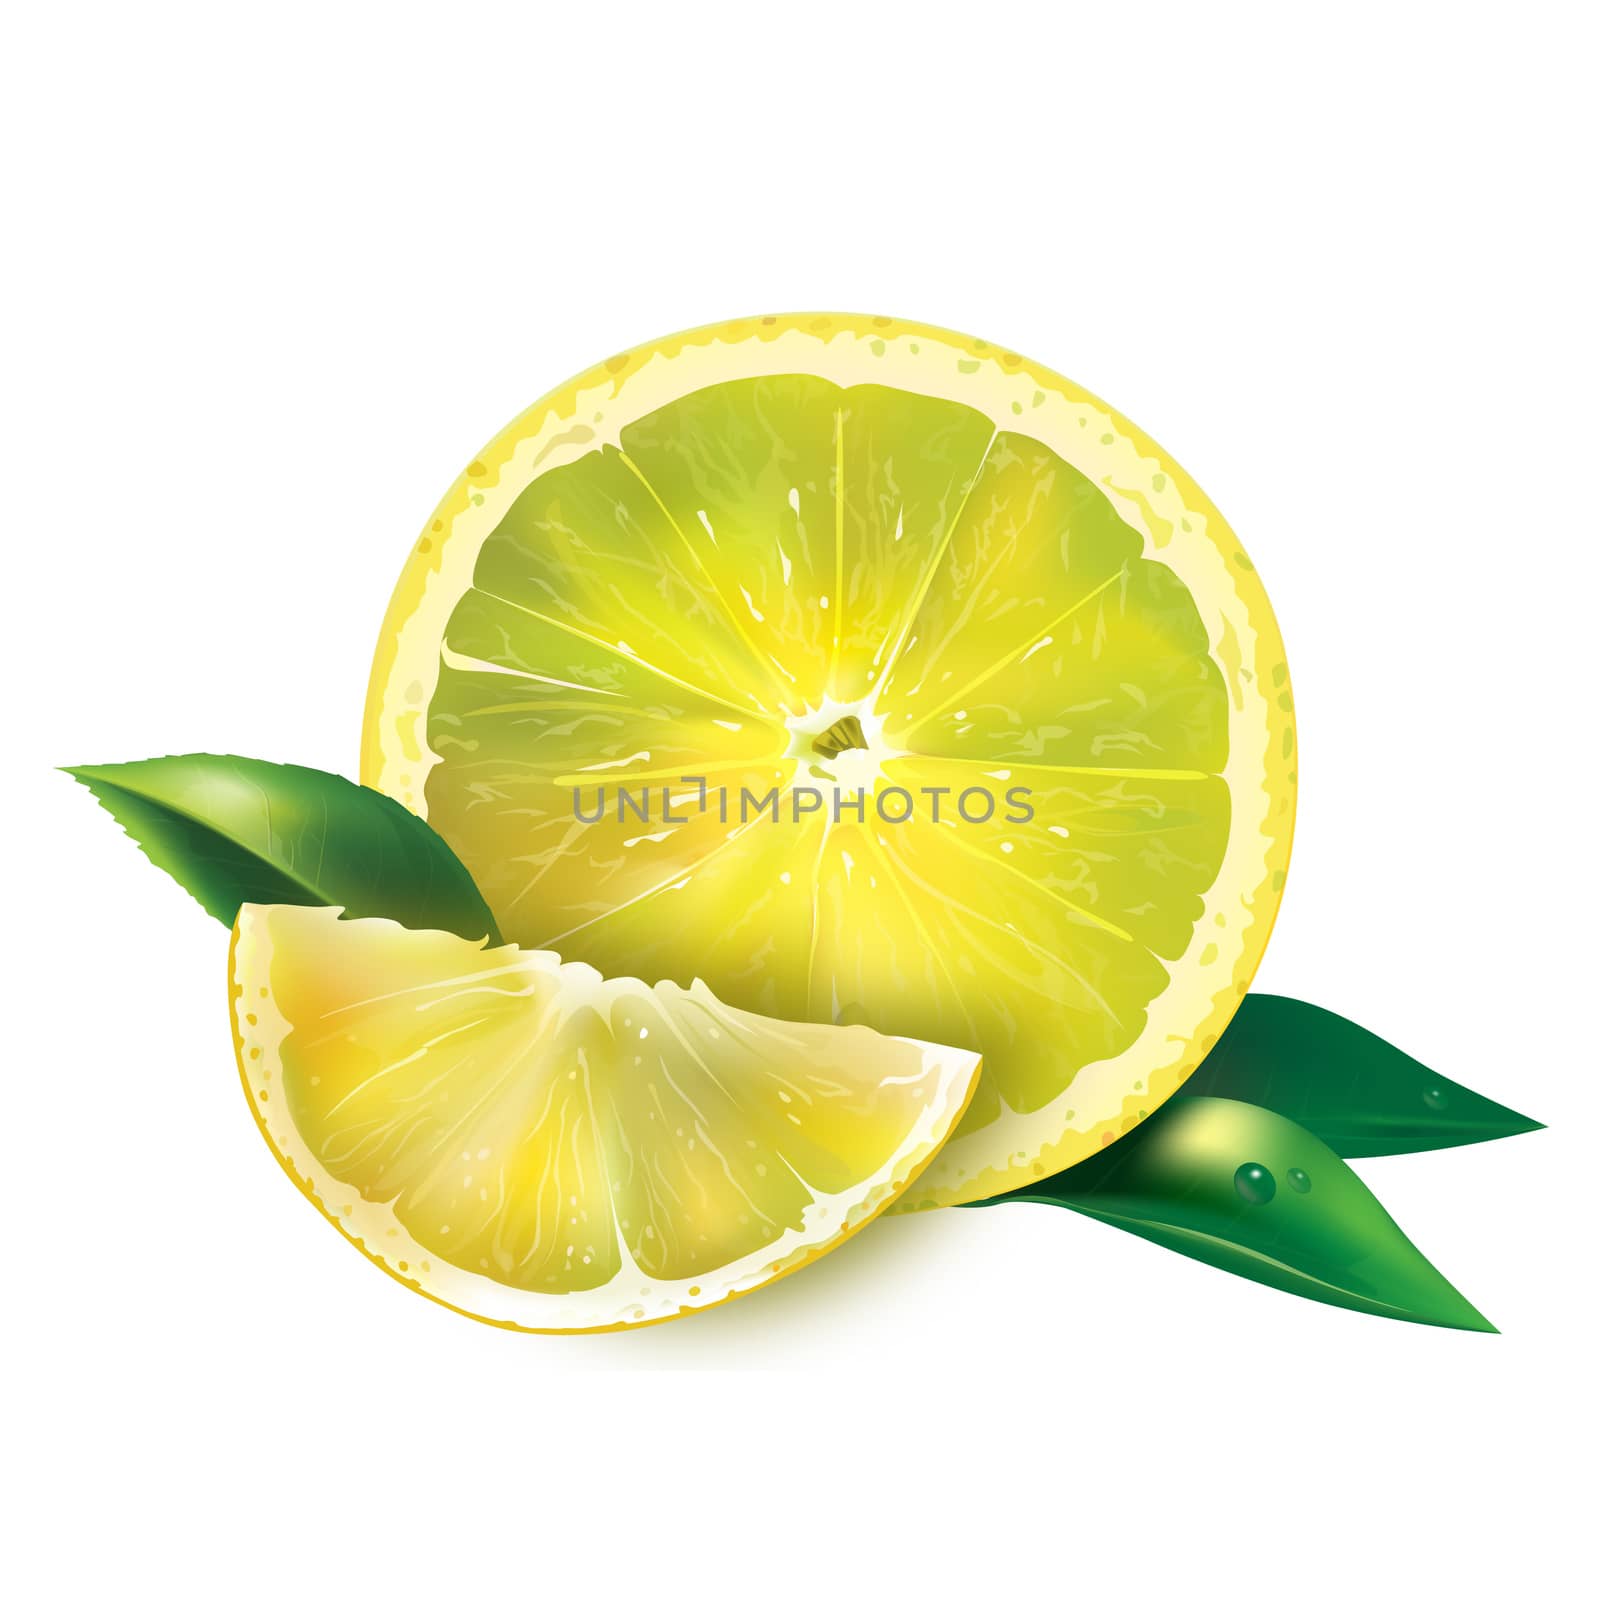 Lemon on white background by ConceptCafe